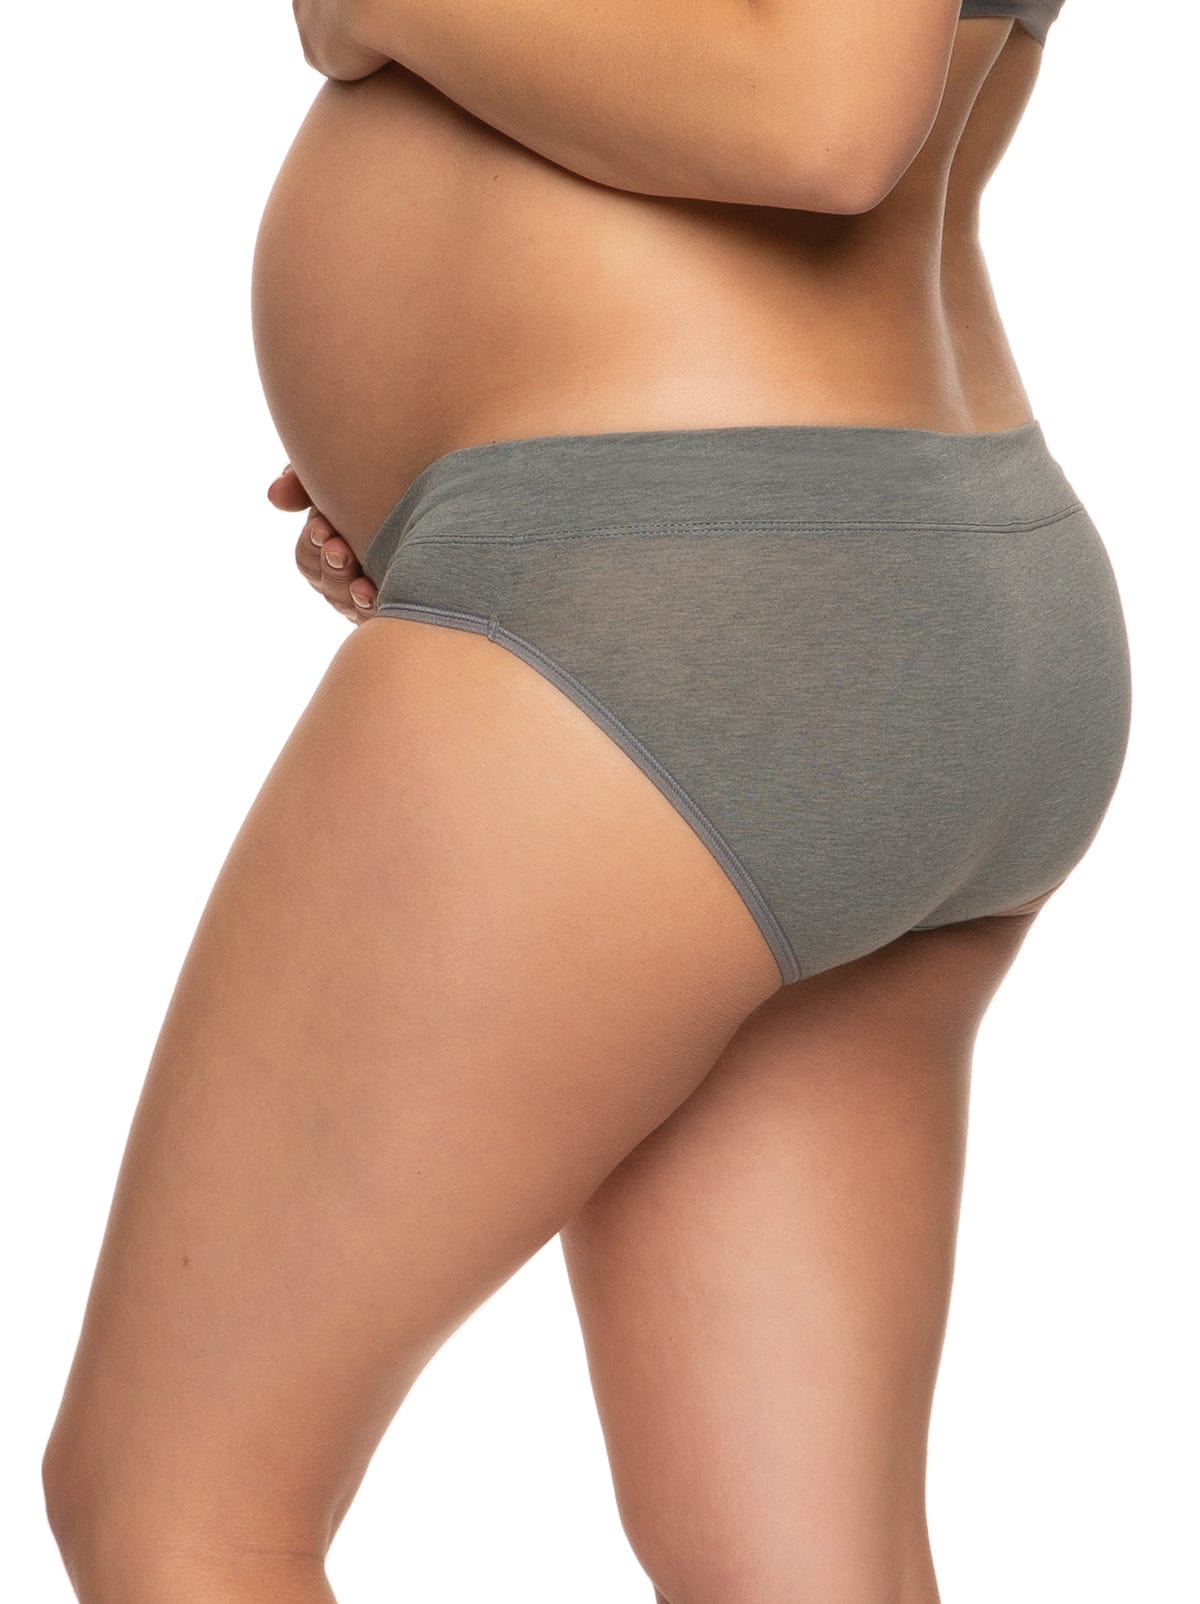 Women's Maternity Panties, Healthy underwear - 5pack – Under Control